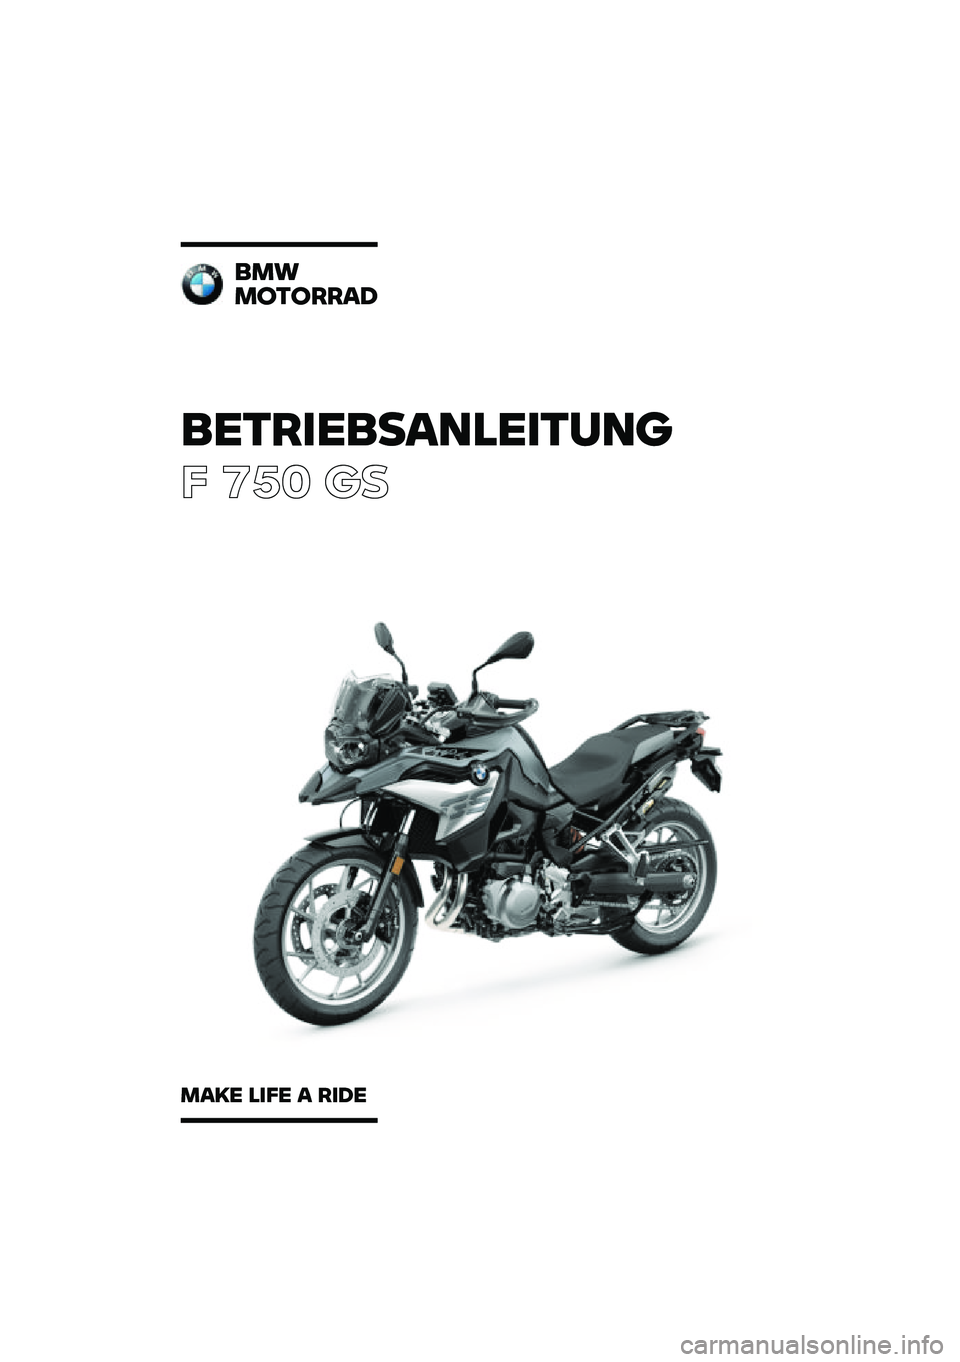 BMW MOTORRAD F 750 GS 2020  Betriebsanleitung (in German) ���������\b�	�
�����	�\f
� ��� �\b�	
��
�
�
������\b�
�
�\b�� �
��� �\b ���� 